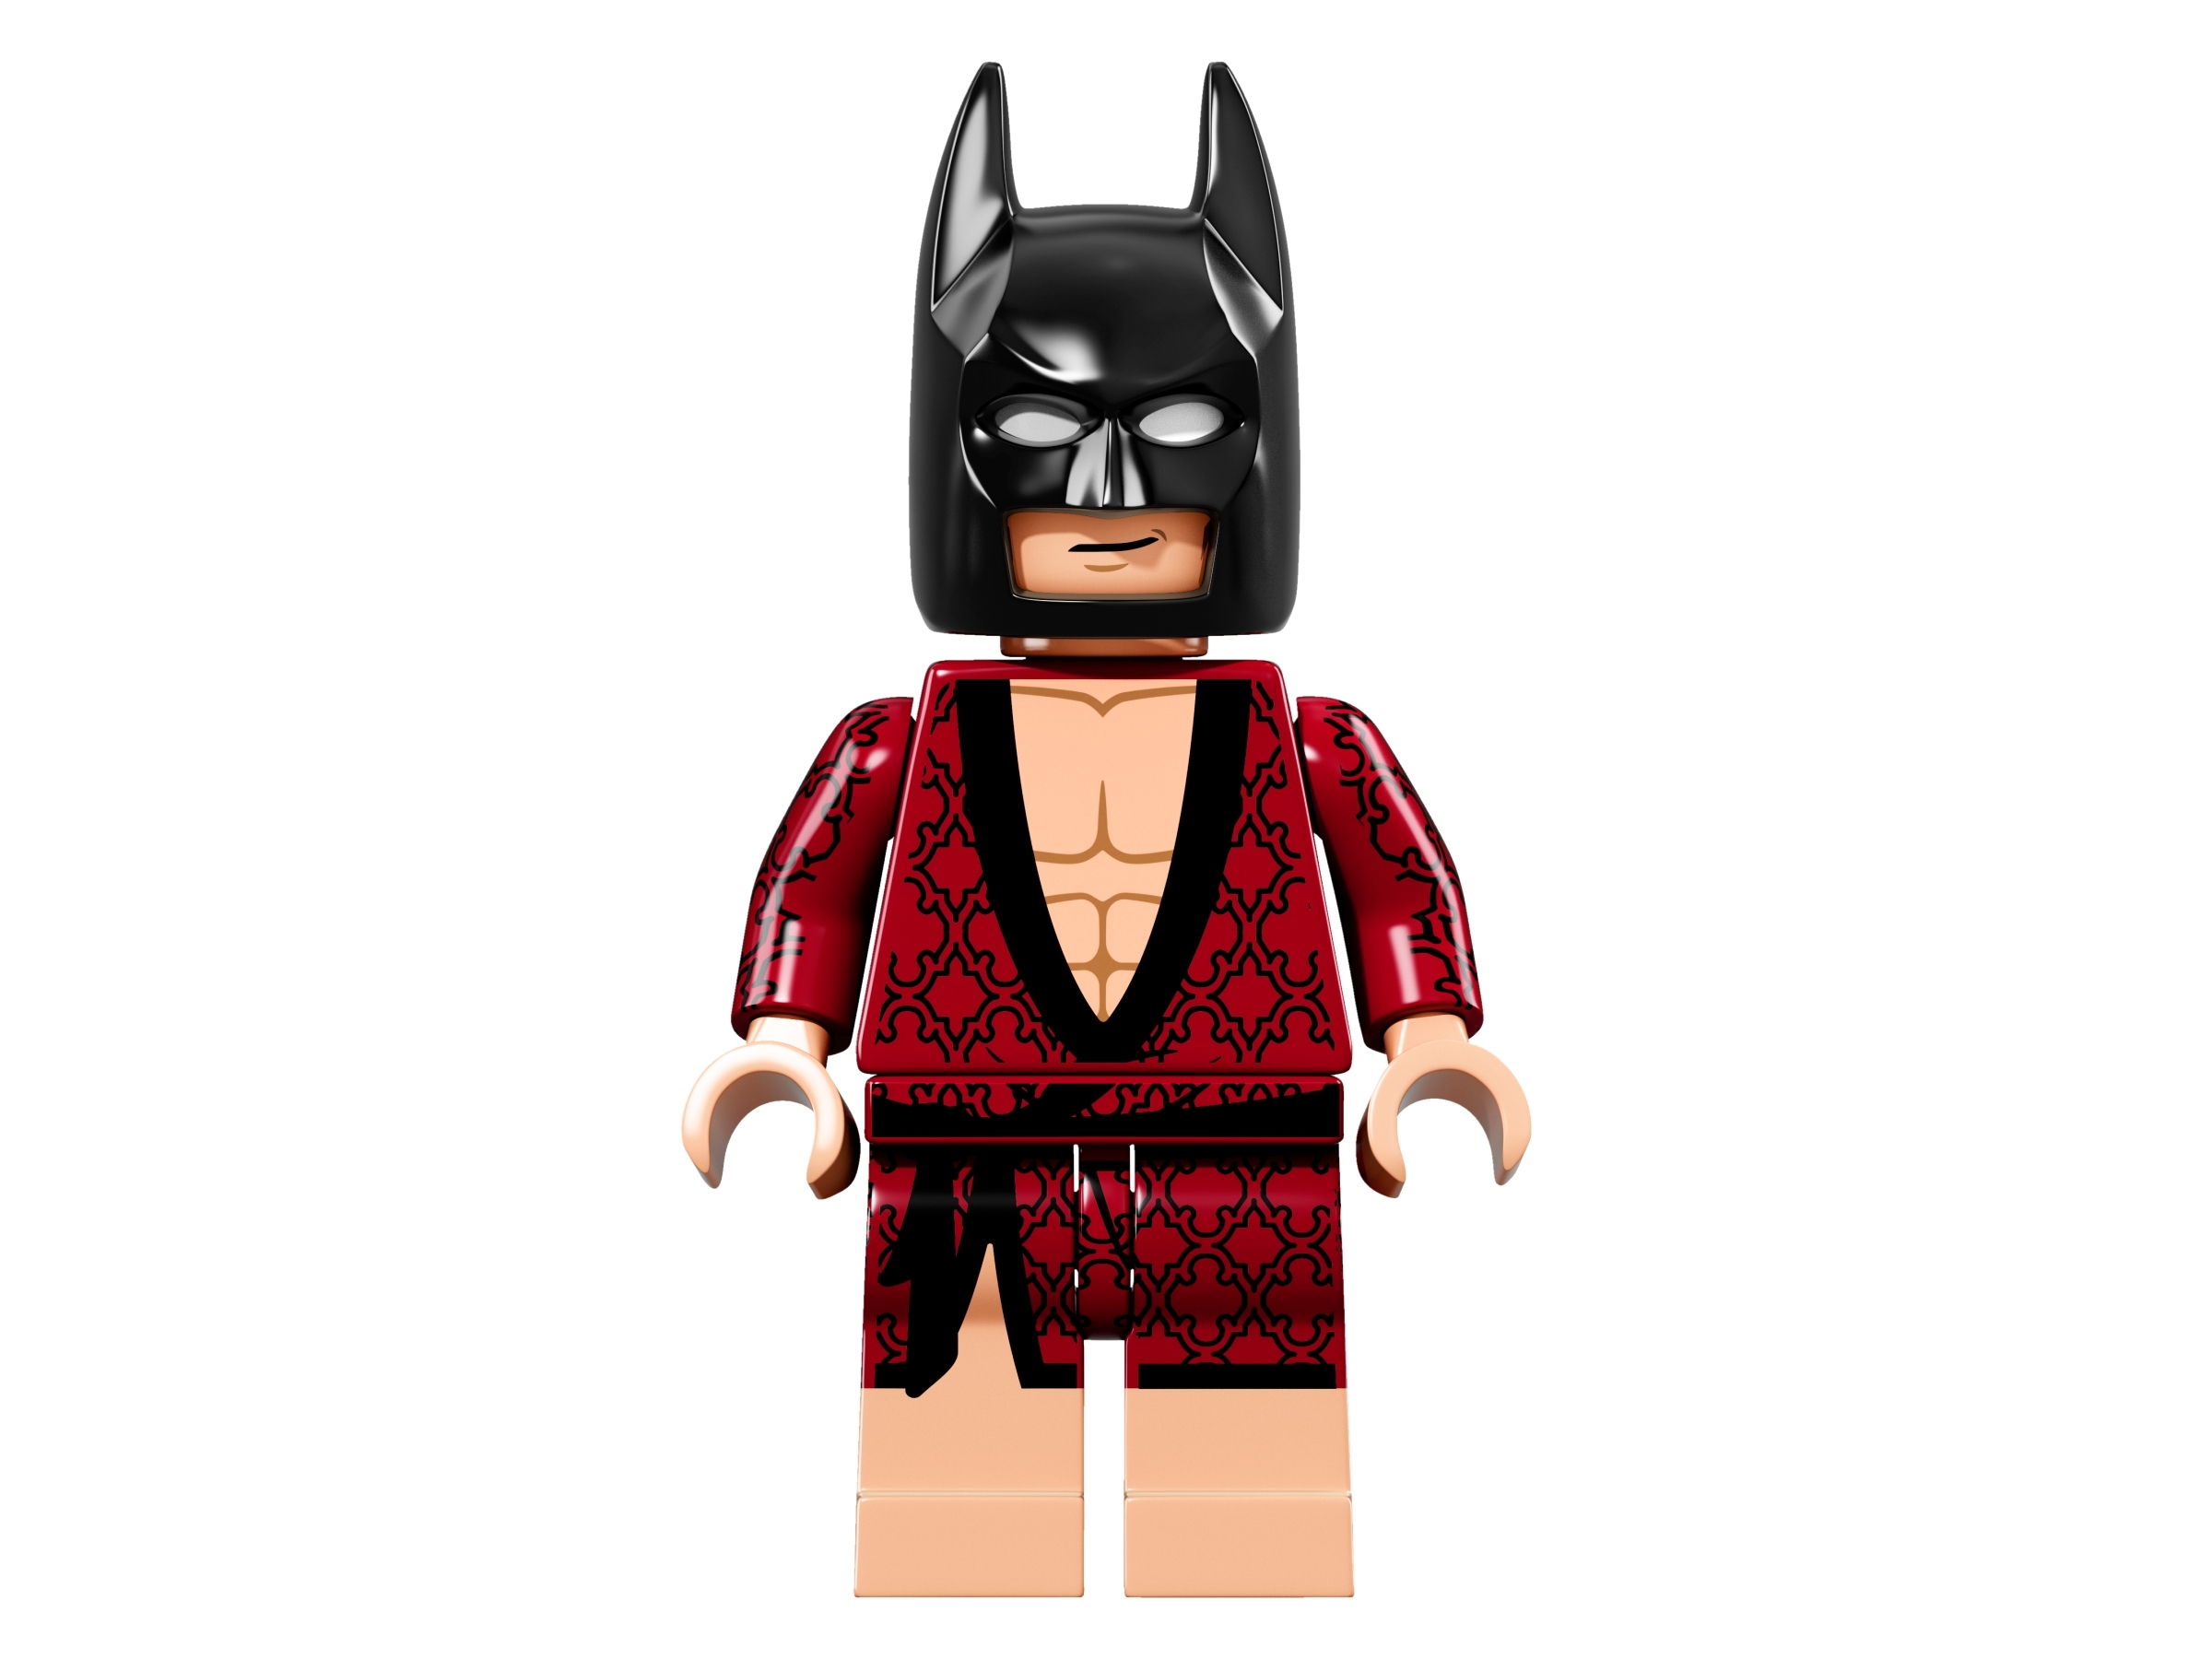 The LEGO Batman Movie 71017 Glam Metal Batman Minifigure (not